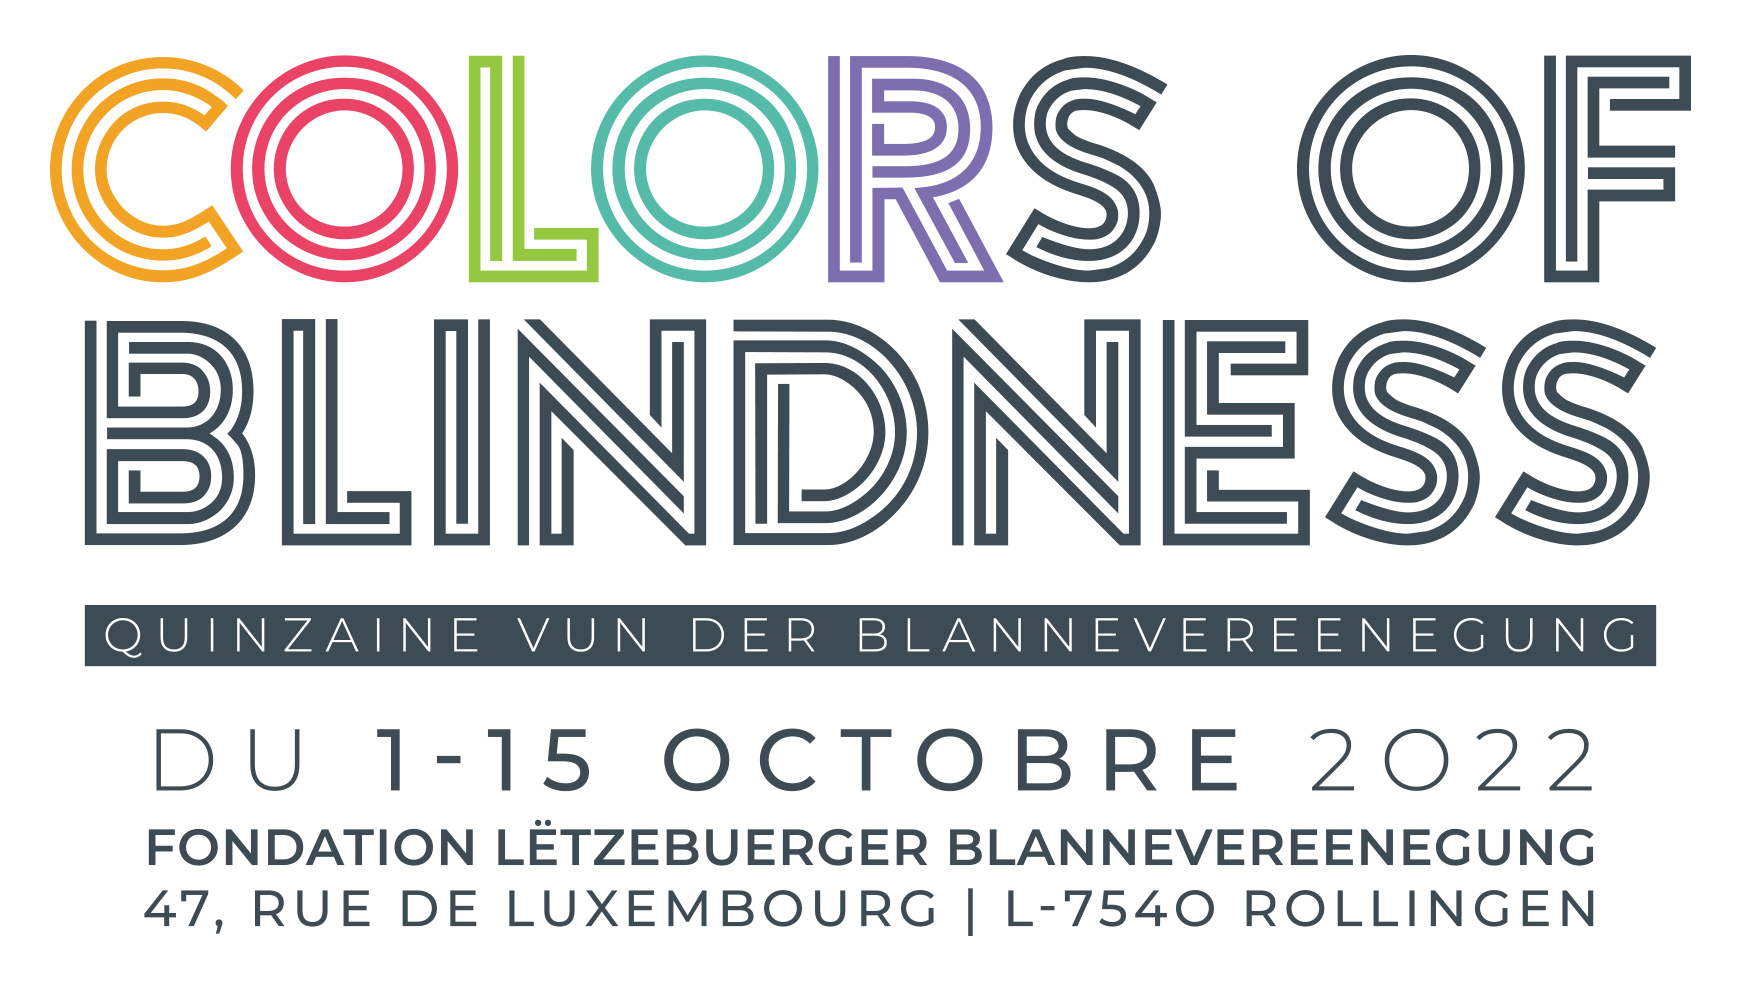 Logo "Colors of Blindness" fair